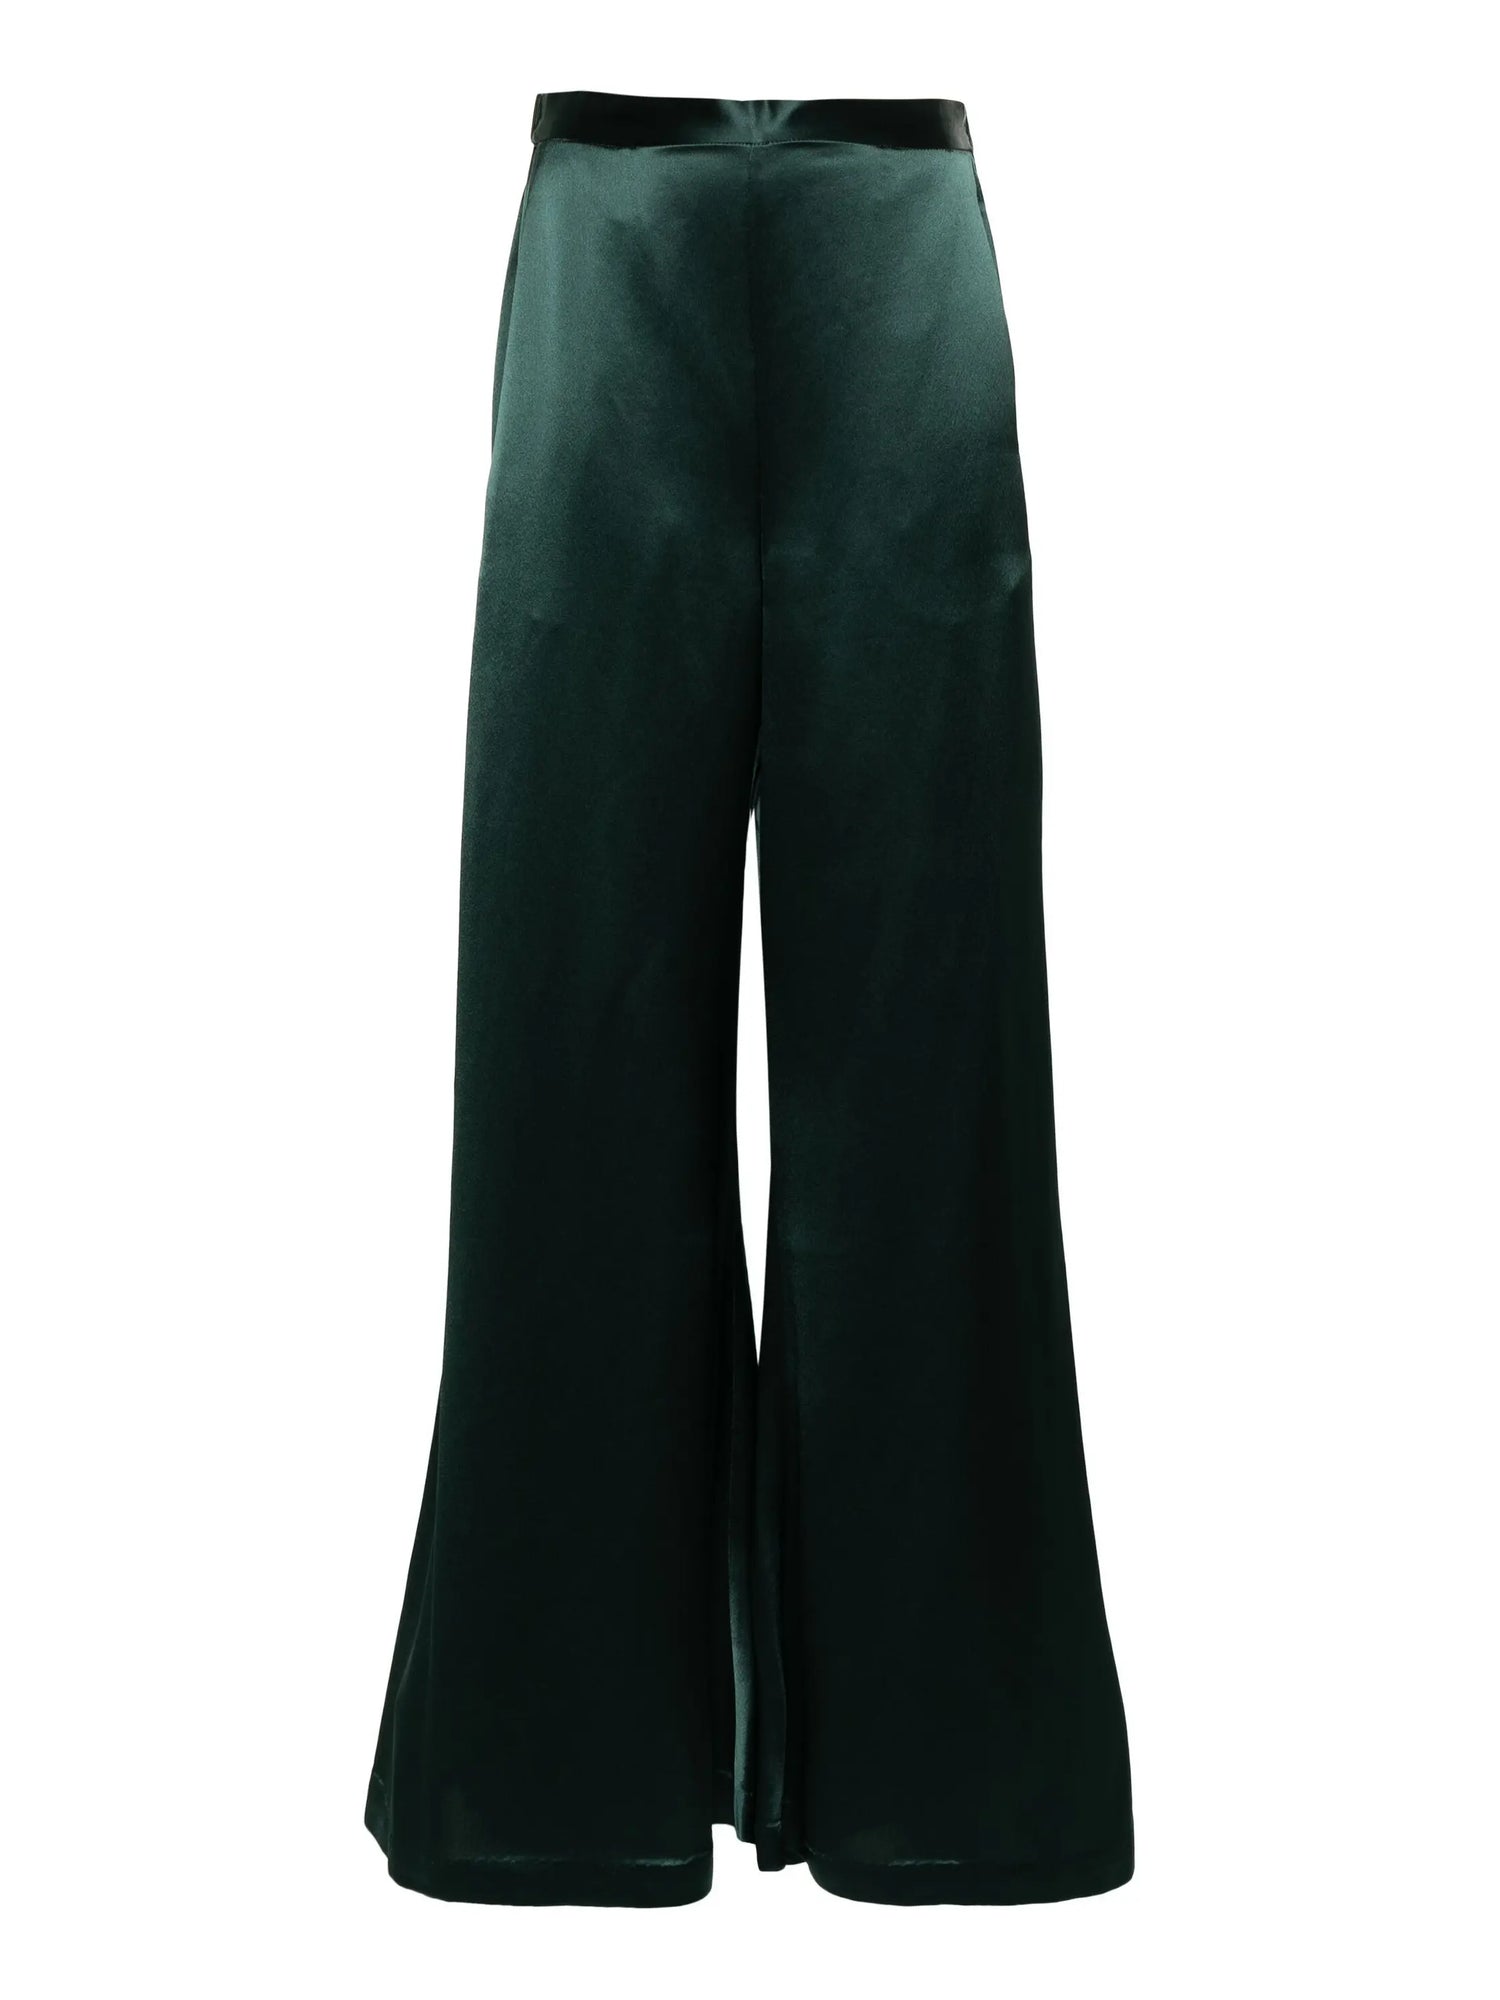 LUCEE pants, sycamone green